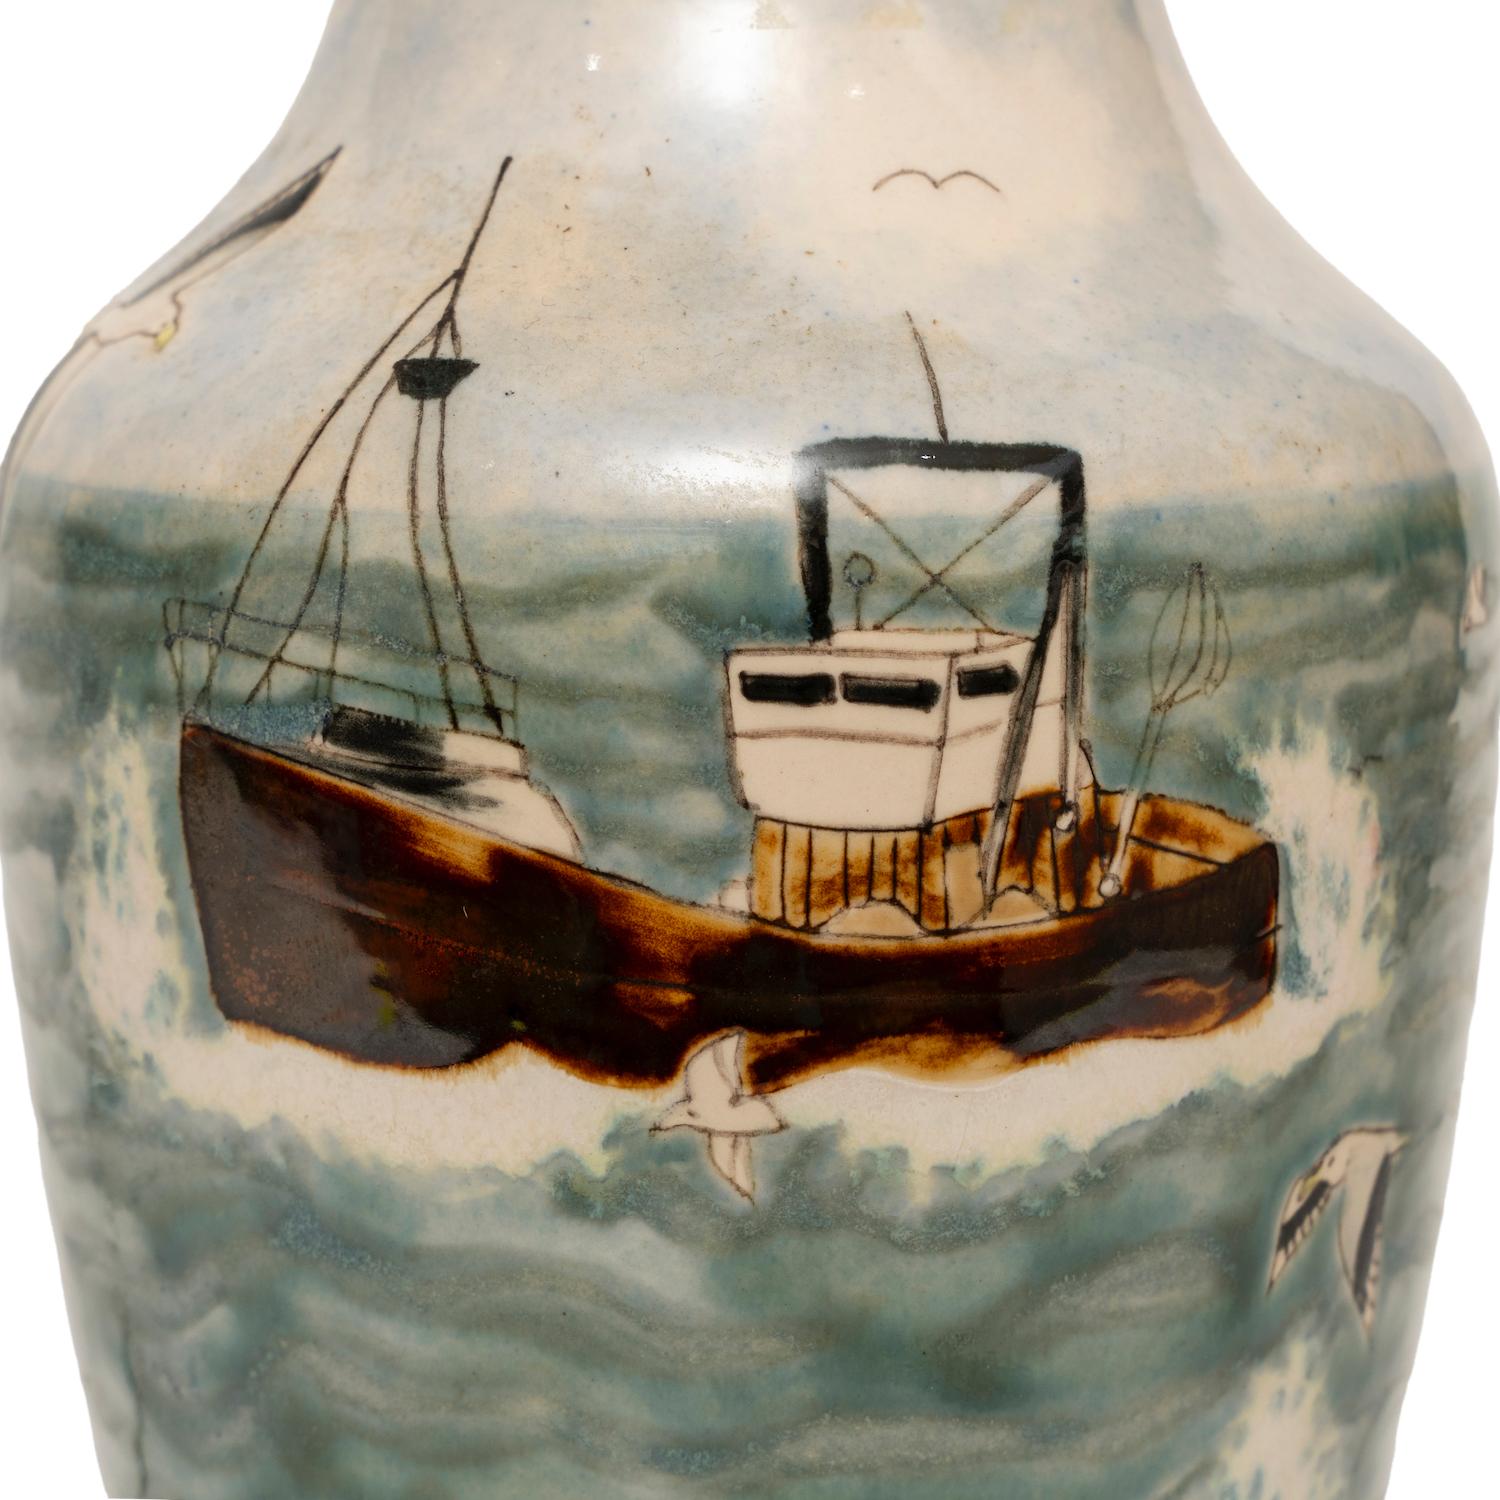 Lamp Table Vase Cobridge Stoneware Trawler at Sea Seagulls Rock 37cm/14.5